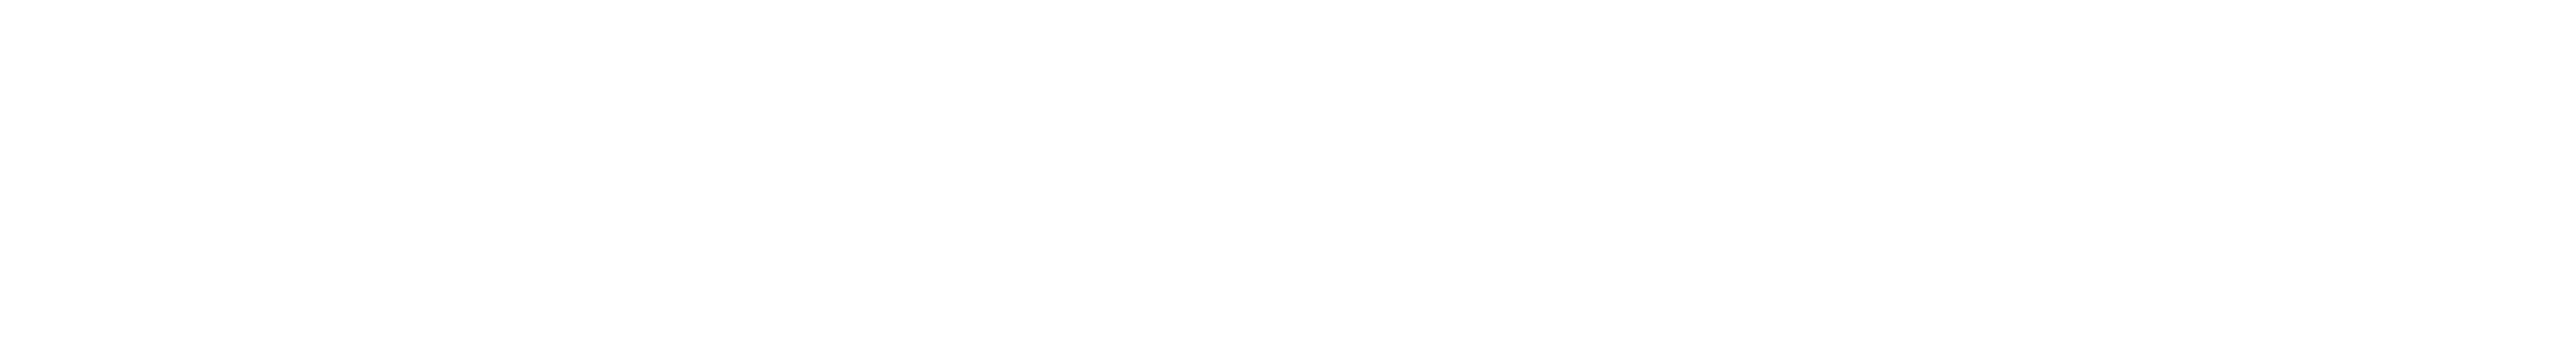 Berkeley SkyDeck Europe, Milano European Call for Startup